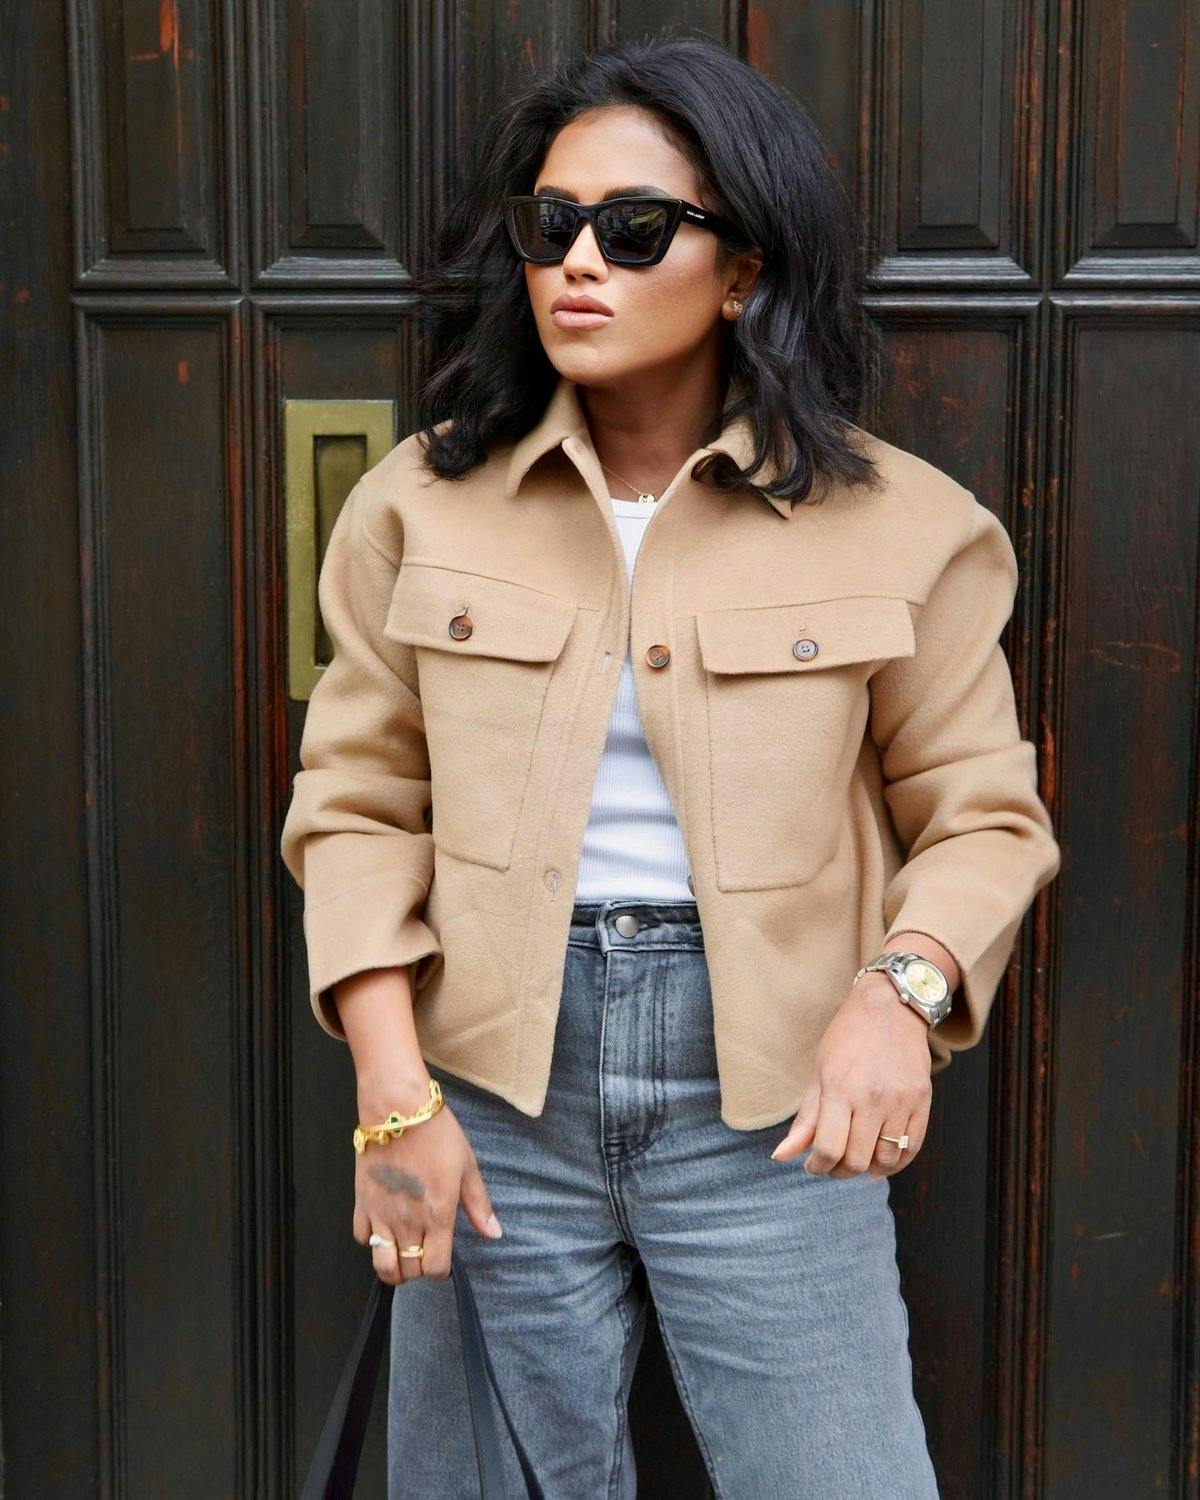 Sachini Dilanka wearing a Theory jacket in London